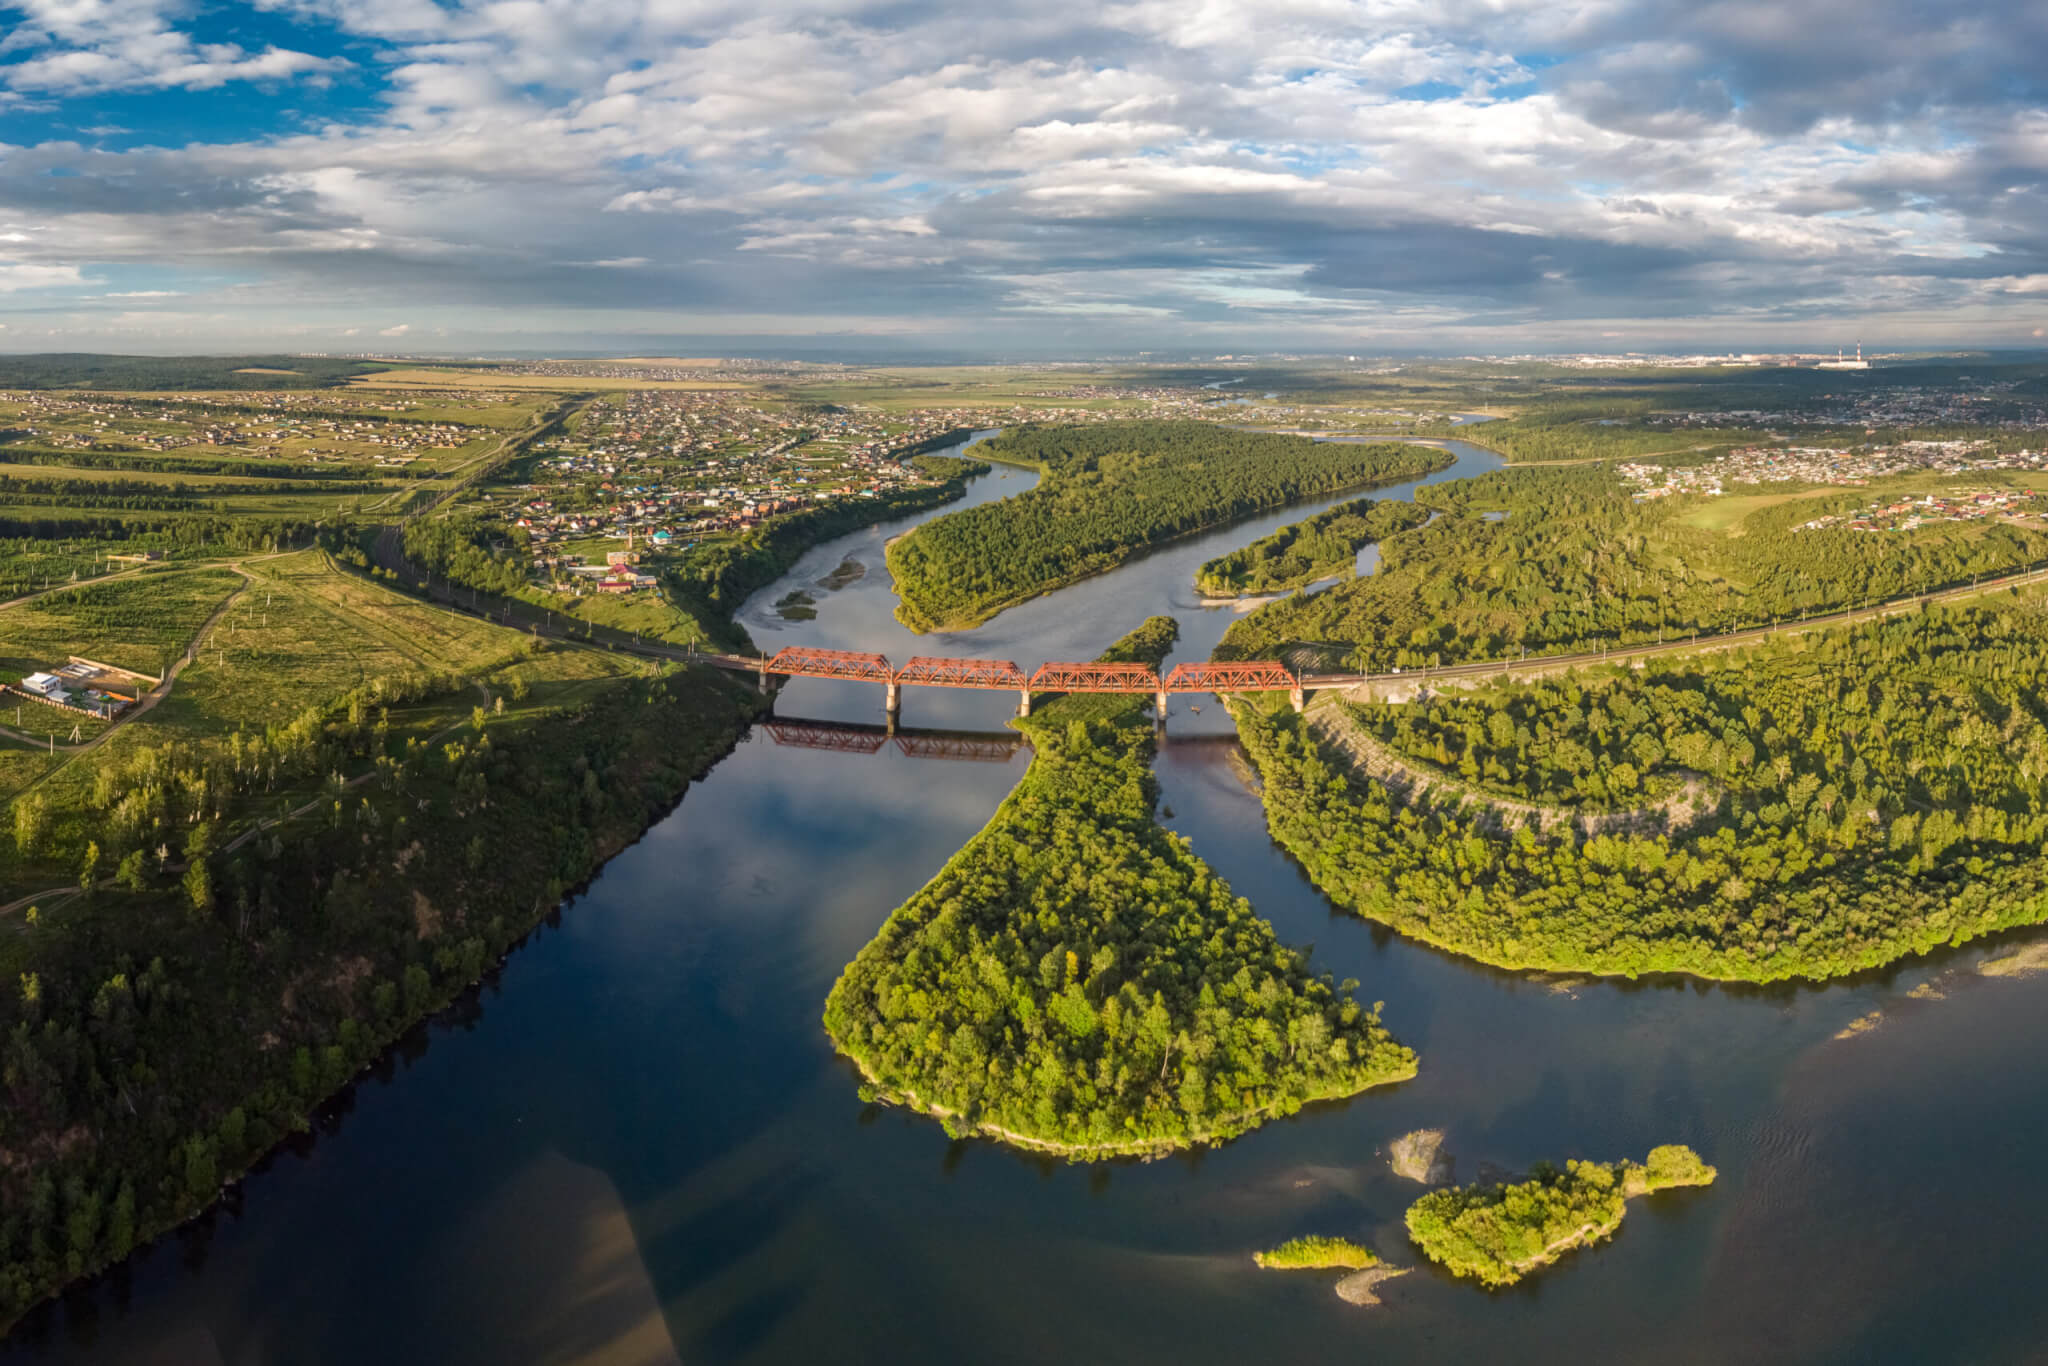 Bridge over the Irkut River on the Trans-Siberian Railway. Aerial view